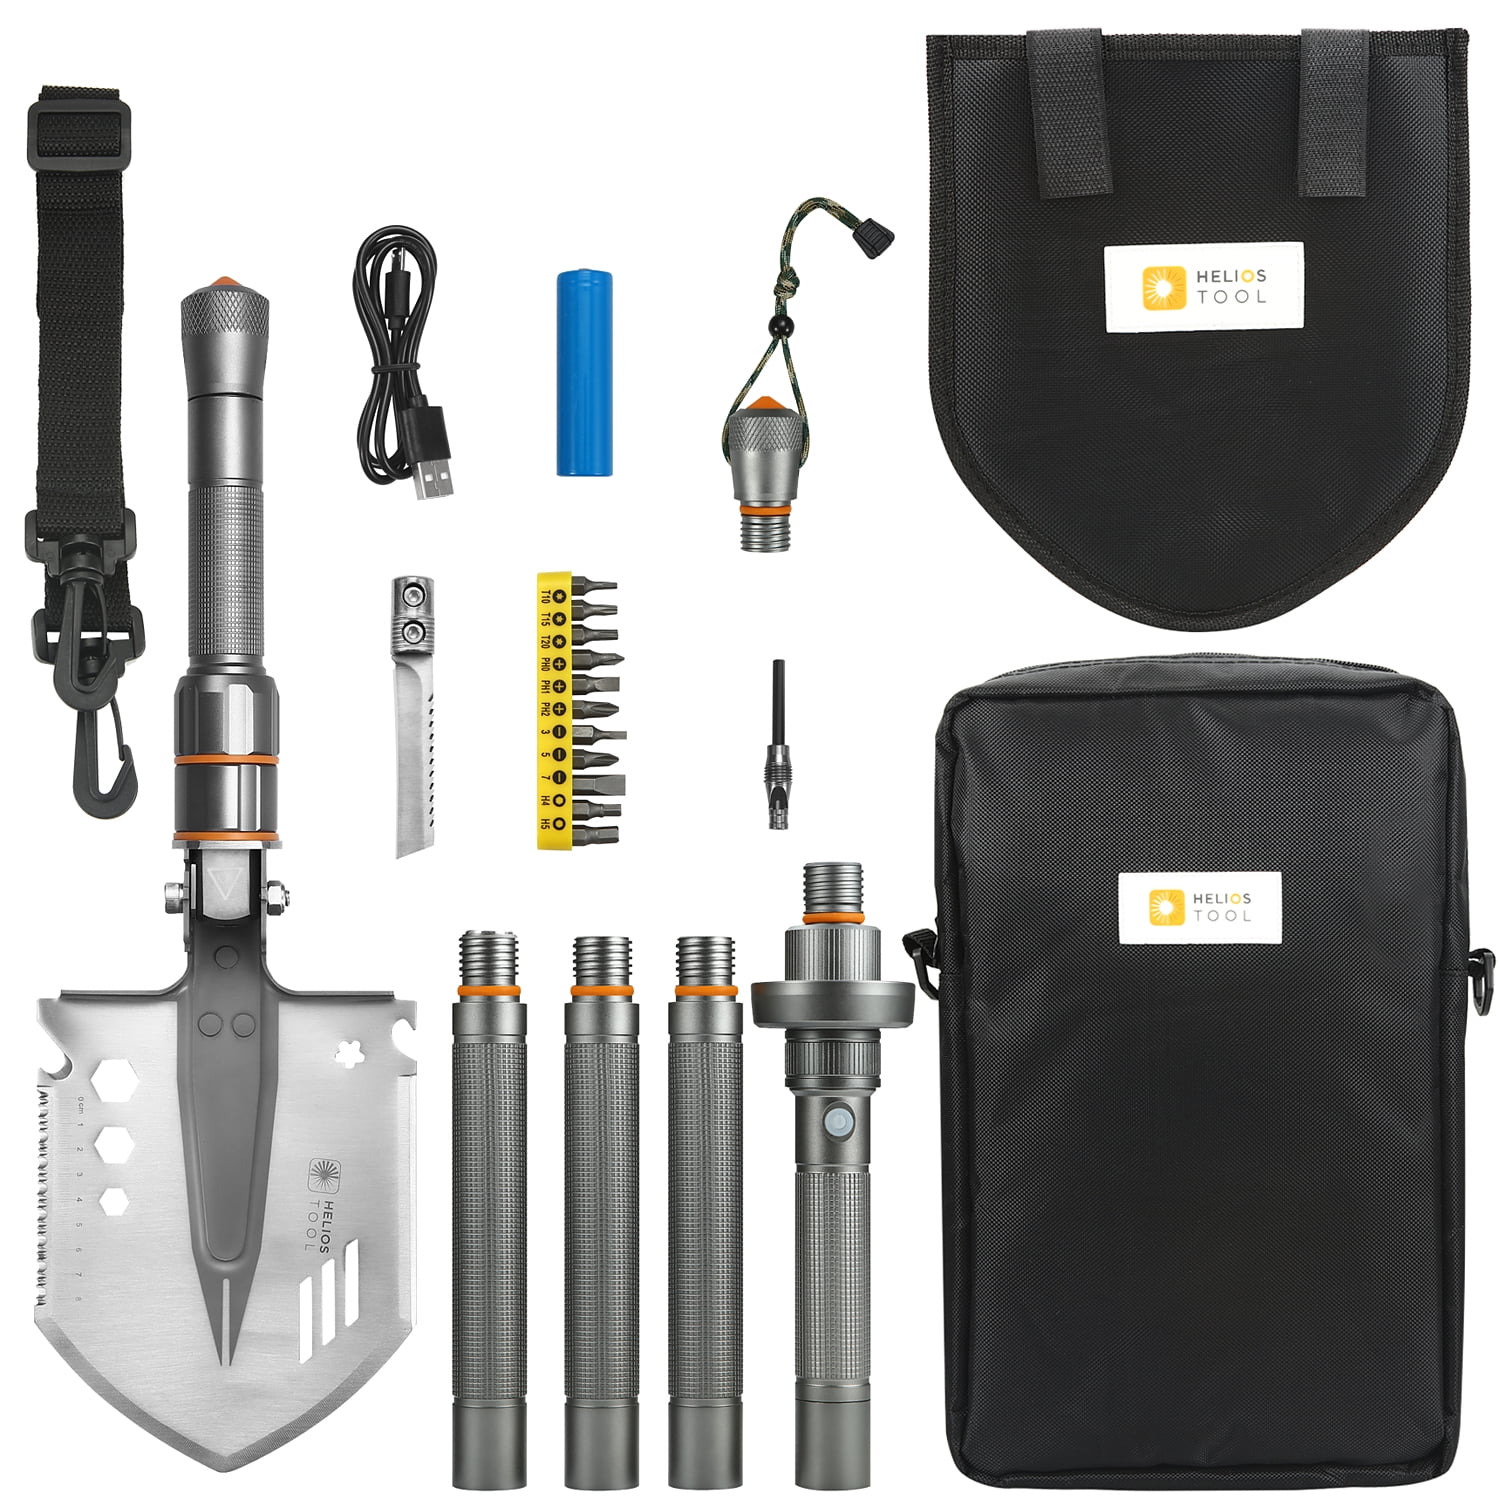 Black Wild Peak 18-in-1 Multi-tool Steel Emergency Survival Shovel with Pouch